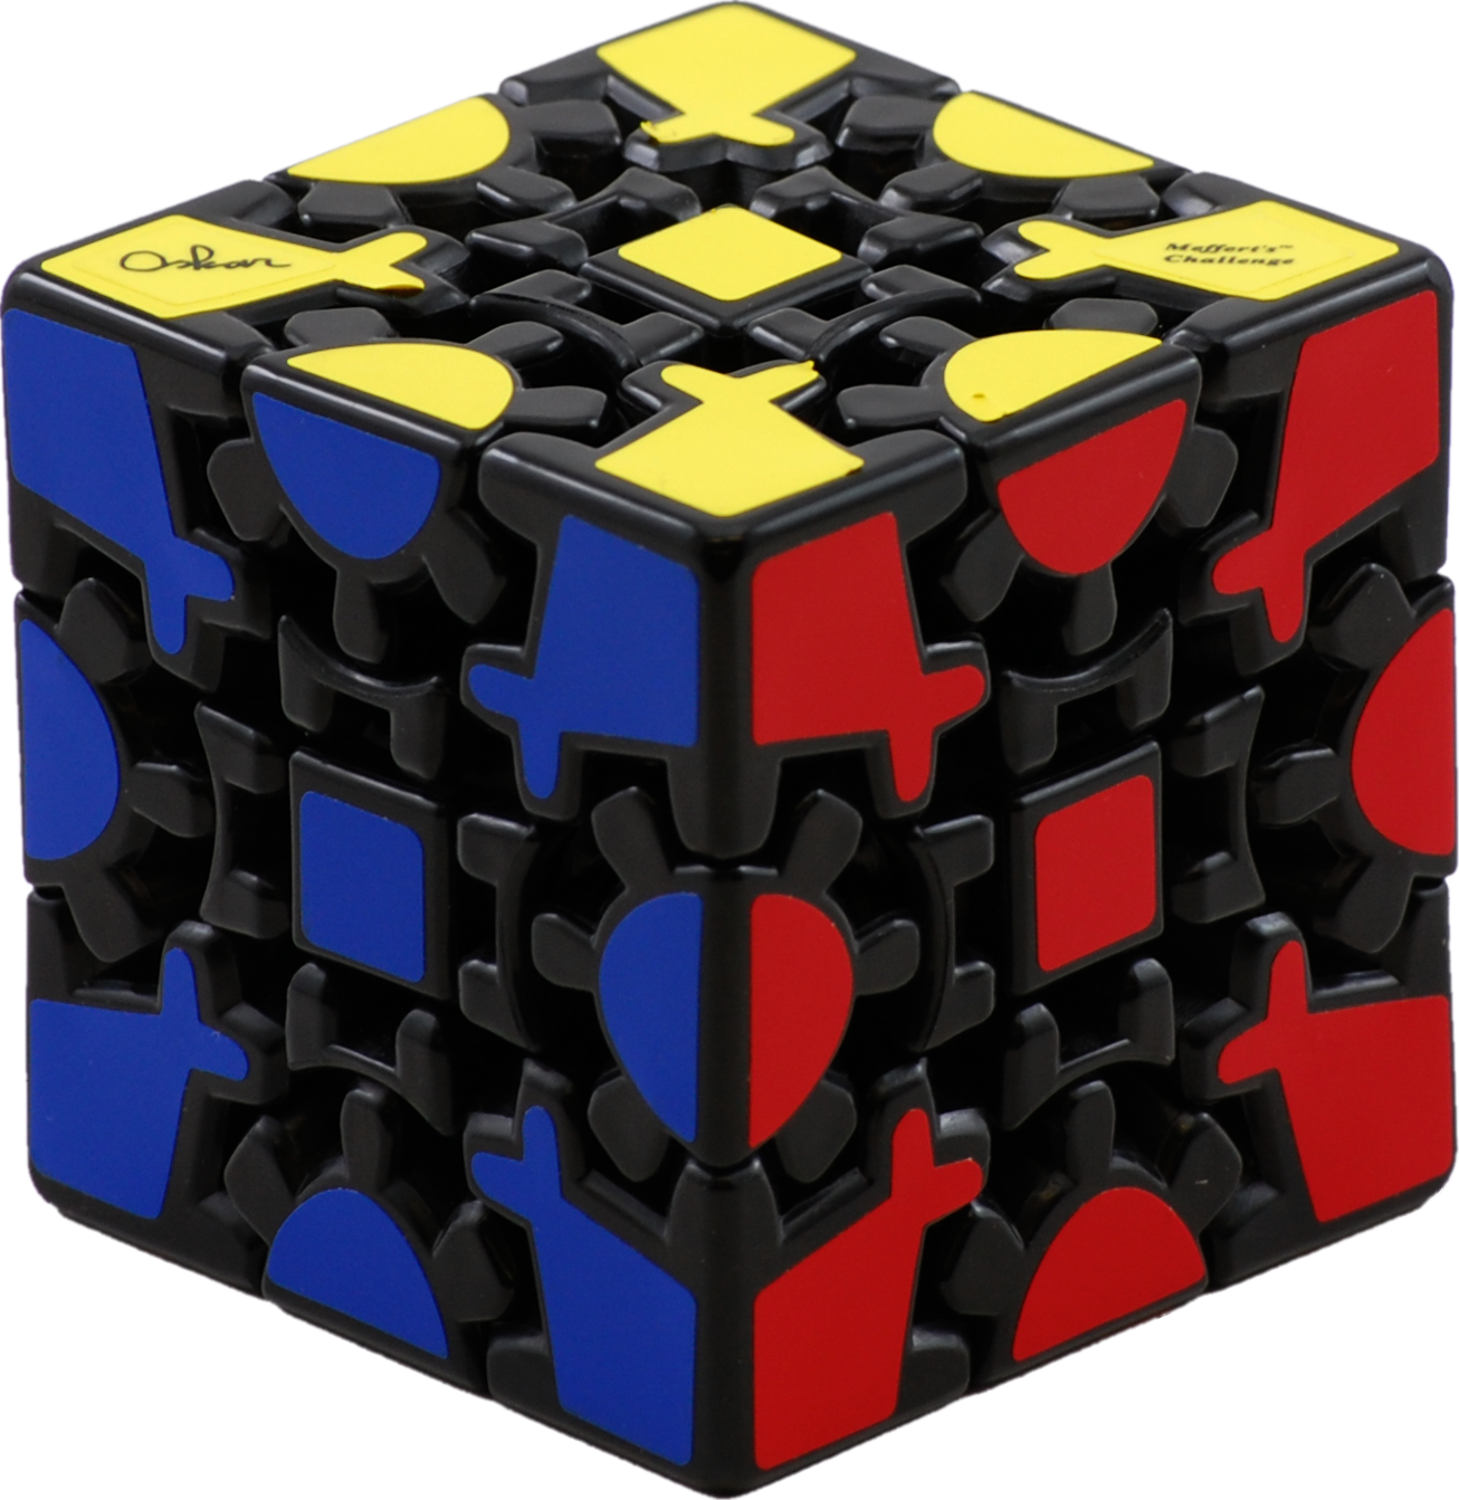 Gear Cube - Rubik's Cube Gear Cube (1459x1500), Png Download